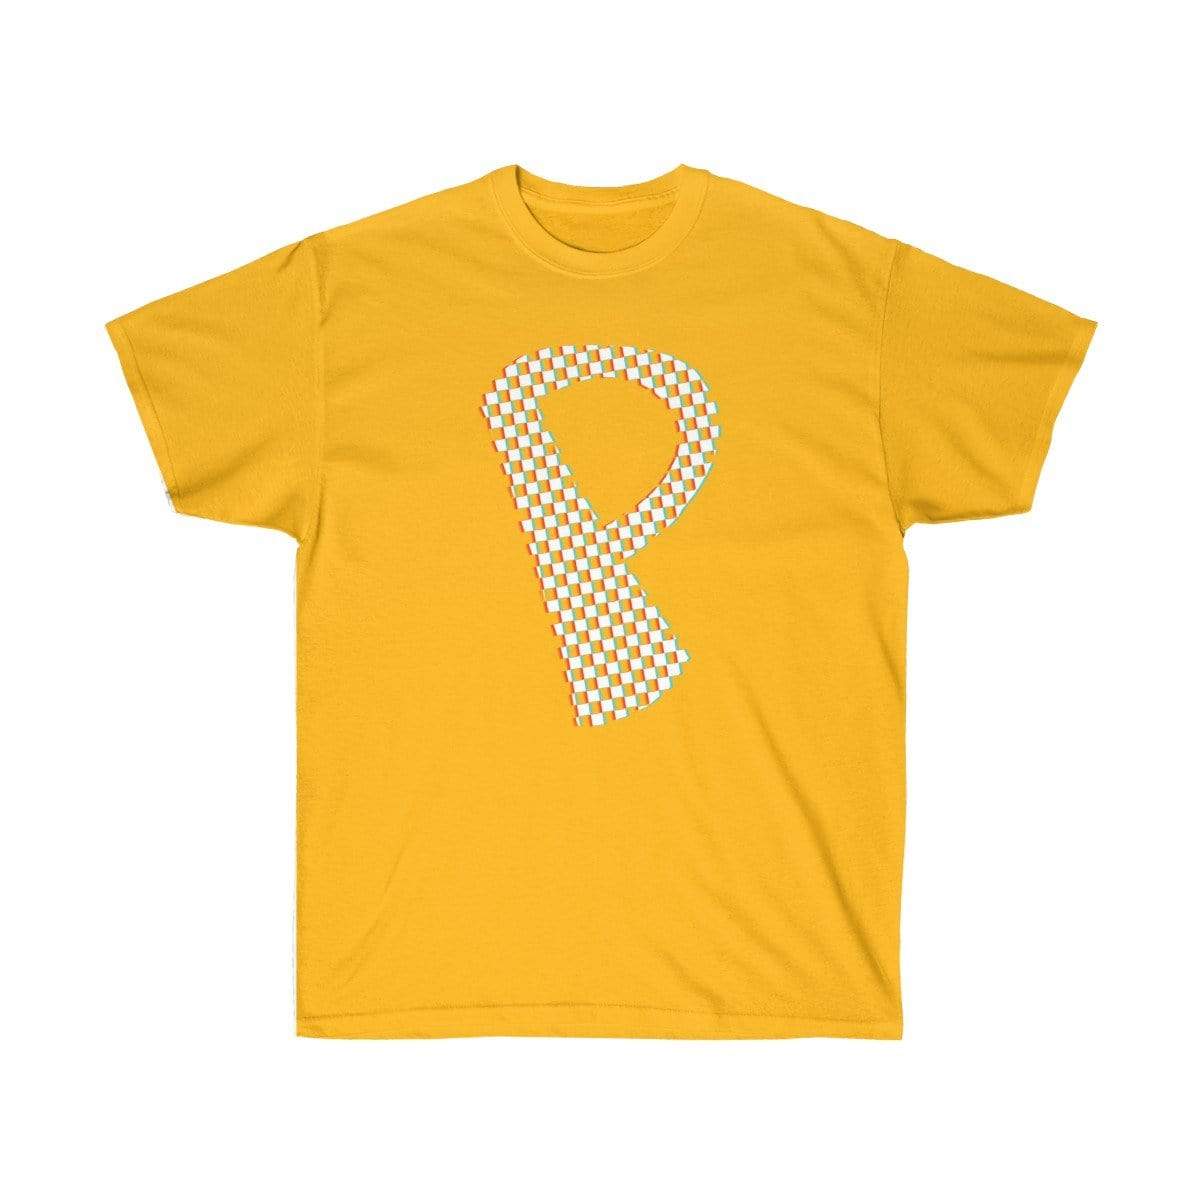 Plumskum T-Shirt Gold / S Checkered, Glitchy, Capital P T-Shirt